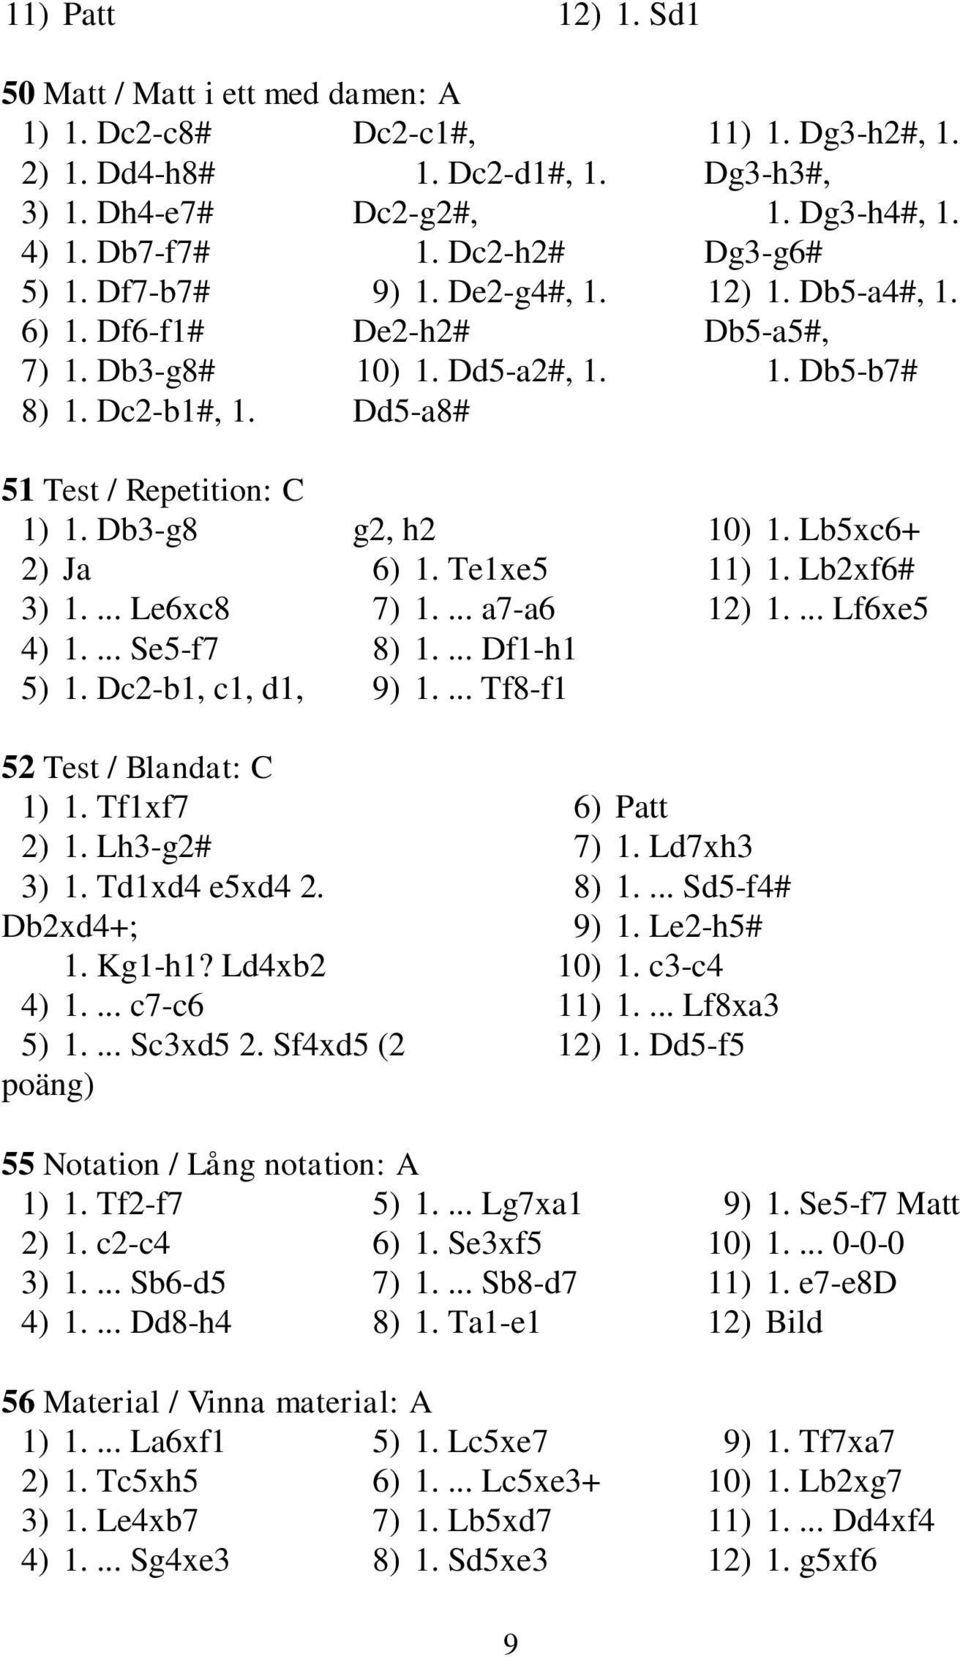 Db3-g8 2) Ja 3) 1.... Le6xc8 4) 1.... Se5-f7 5) 1. Dc2-b1, c1, d1, g2, h2 6) 1. Te1xe5 7) 1.... a7-a6 8) 1.... Df1-h1 9) 1.... Tf8-f1 10) 1. Lb5xc6+ 11) 1. Lb2xf6# 12) 1.